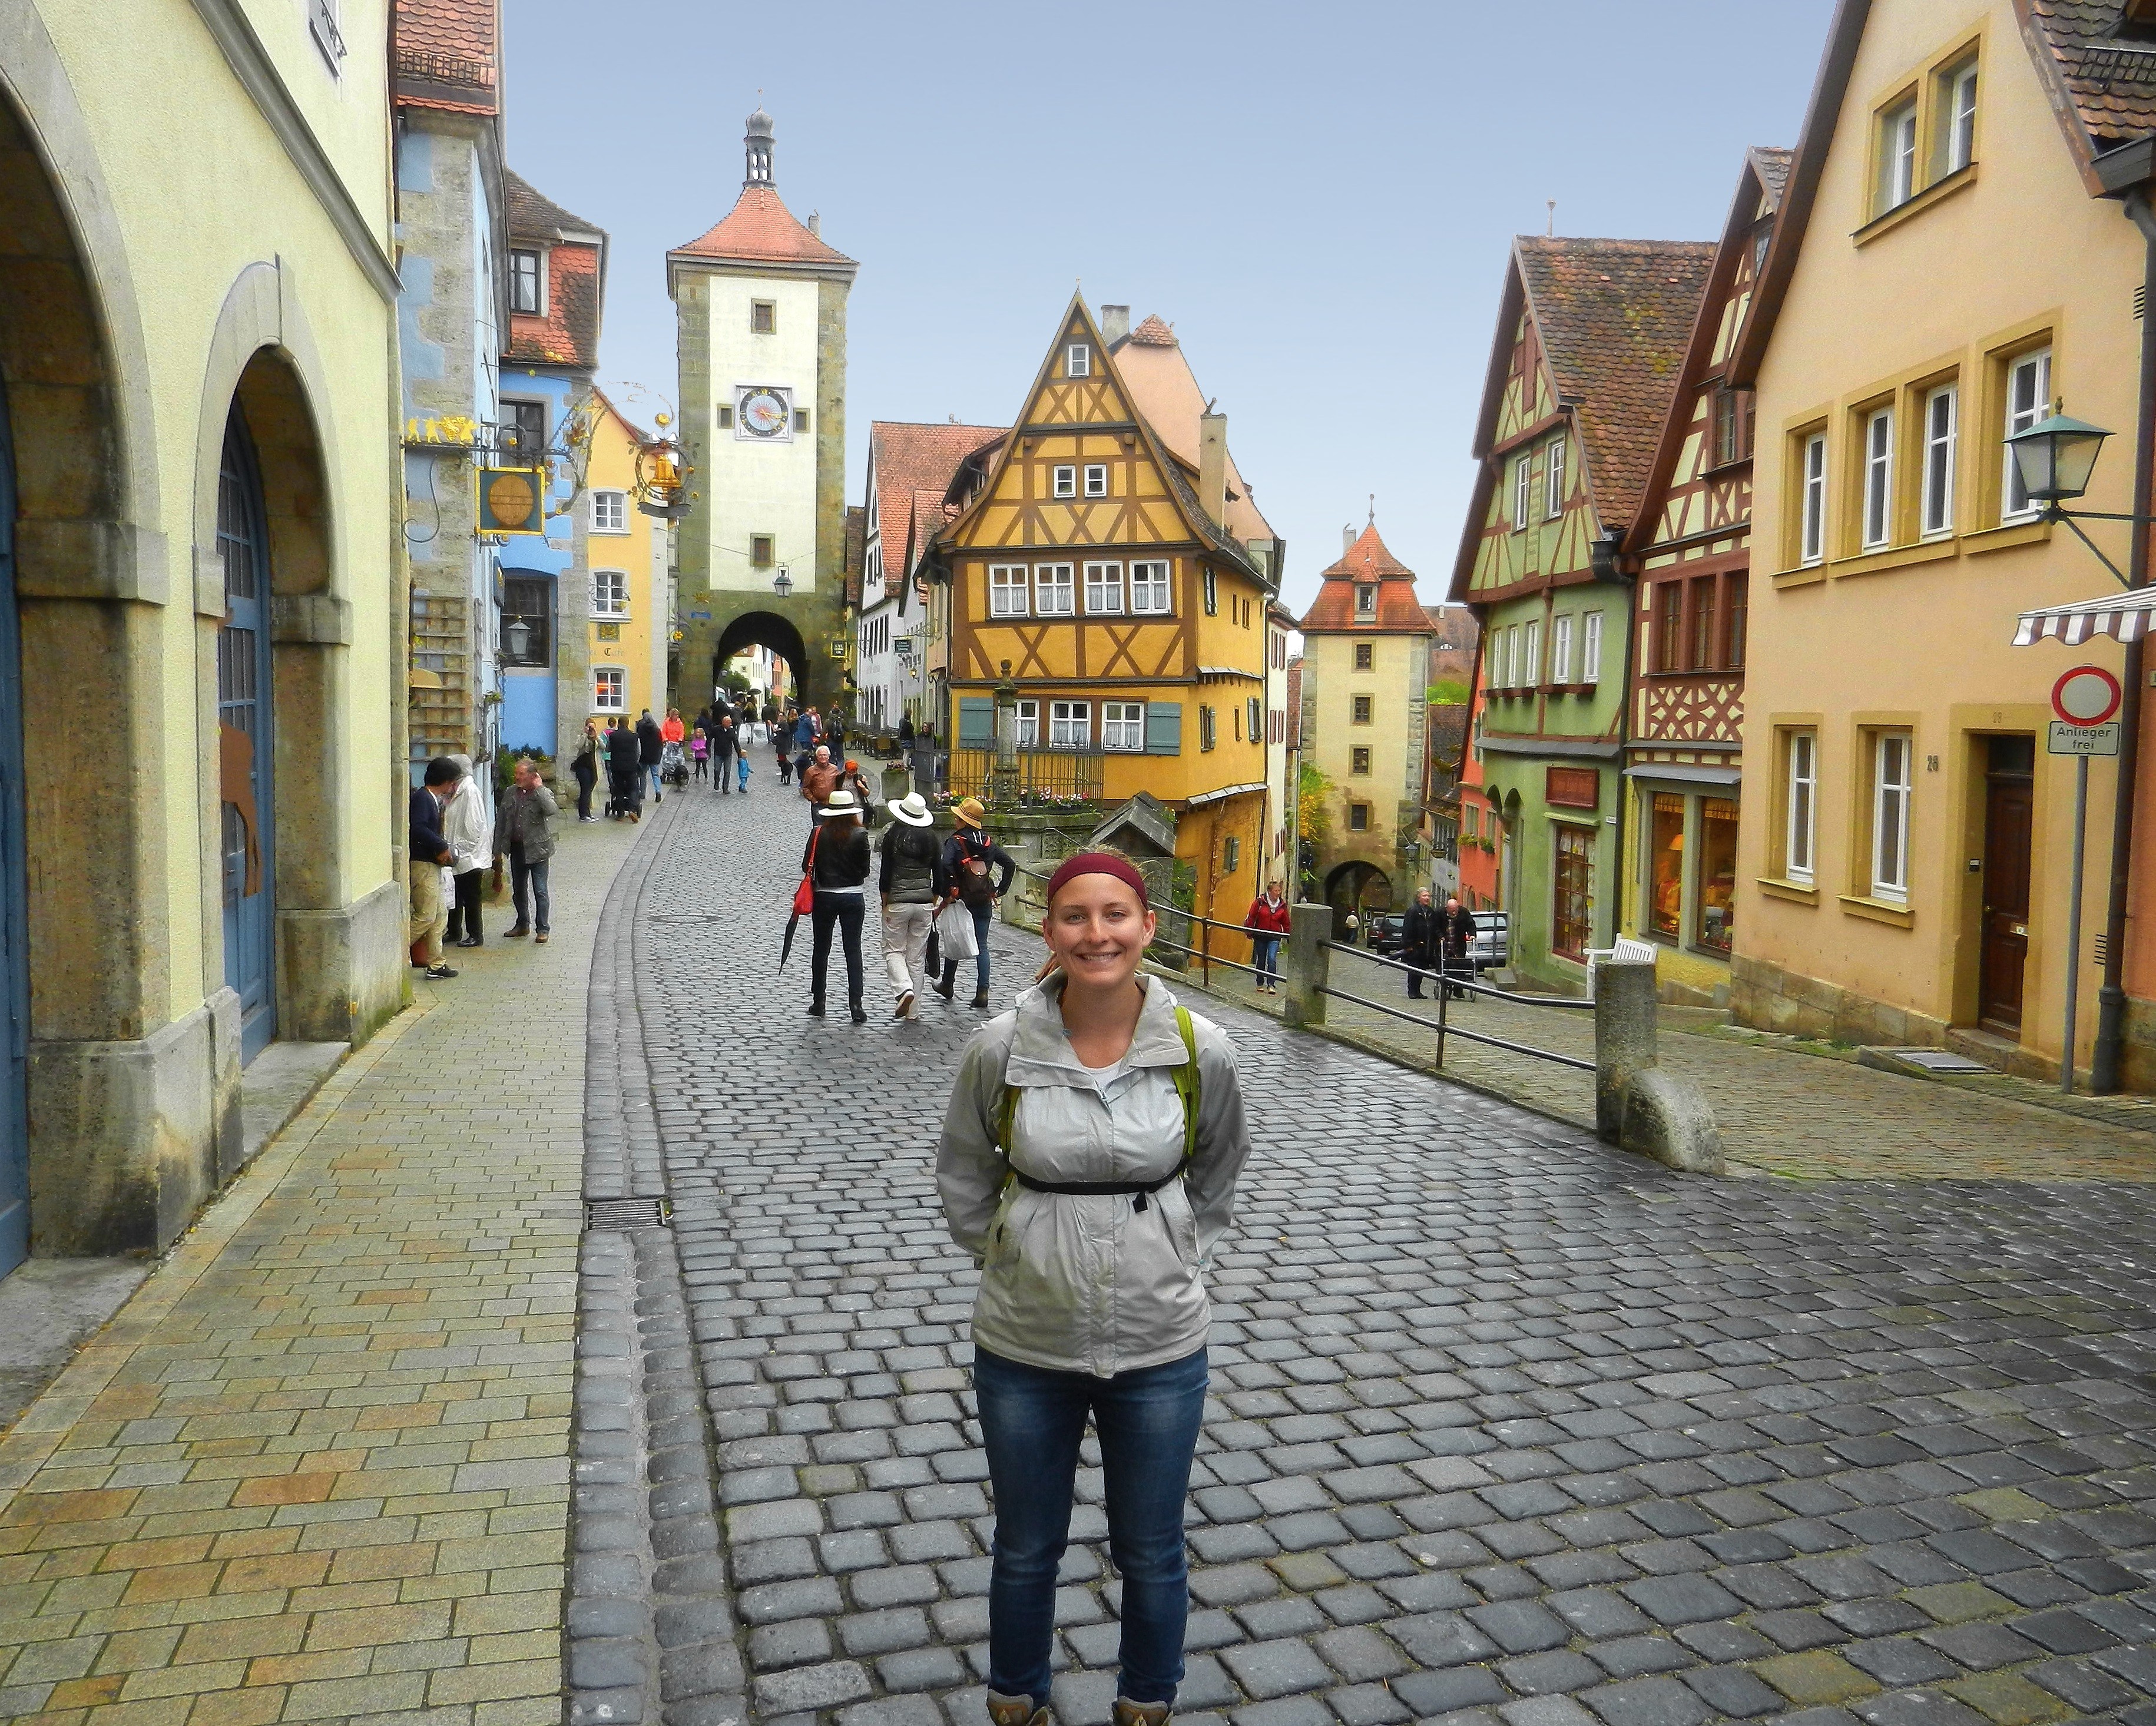 Rothenburg ob der Tauber - The Incredibly Long Journey